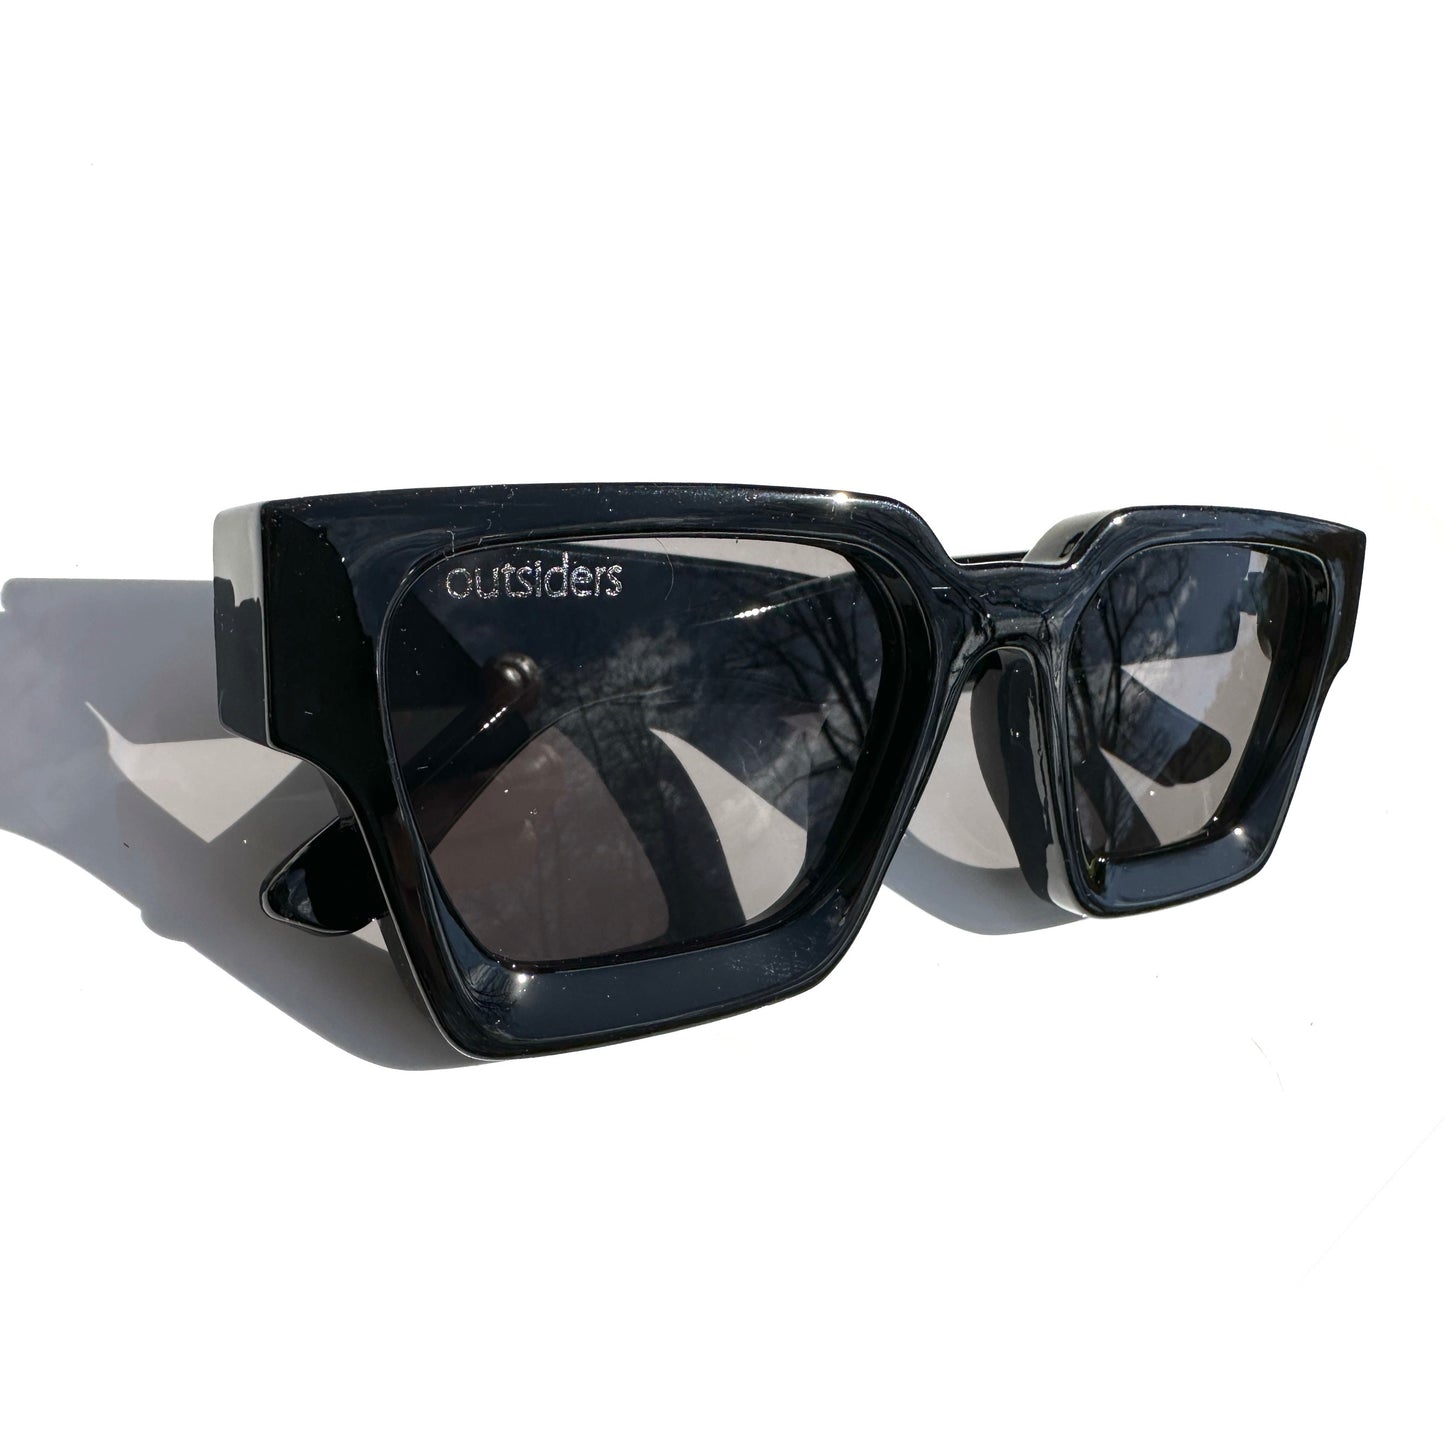 Outsiders Waved Sunglasses - Black